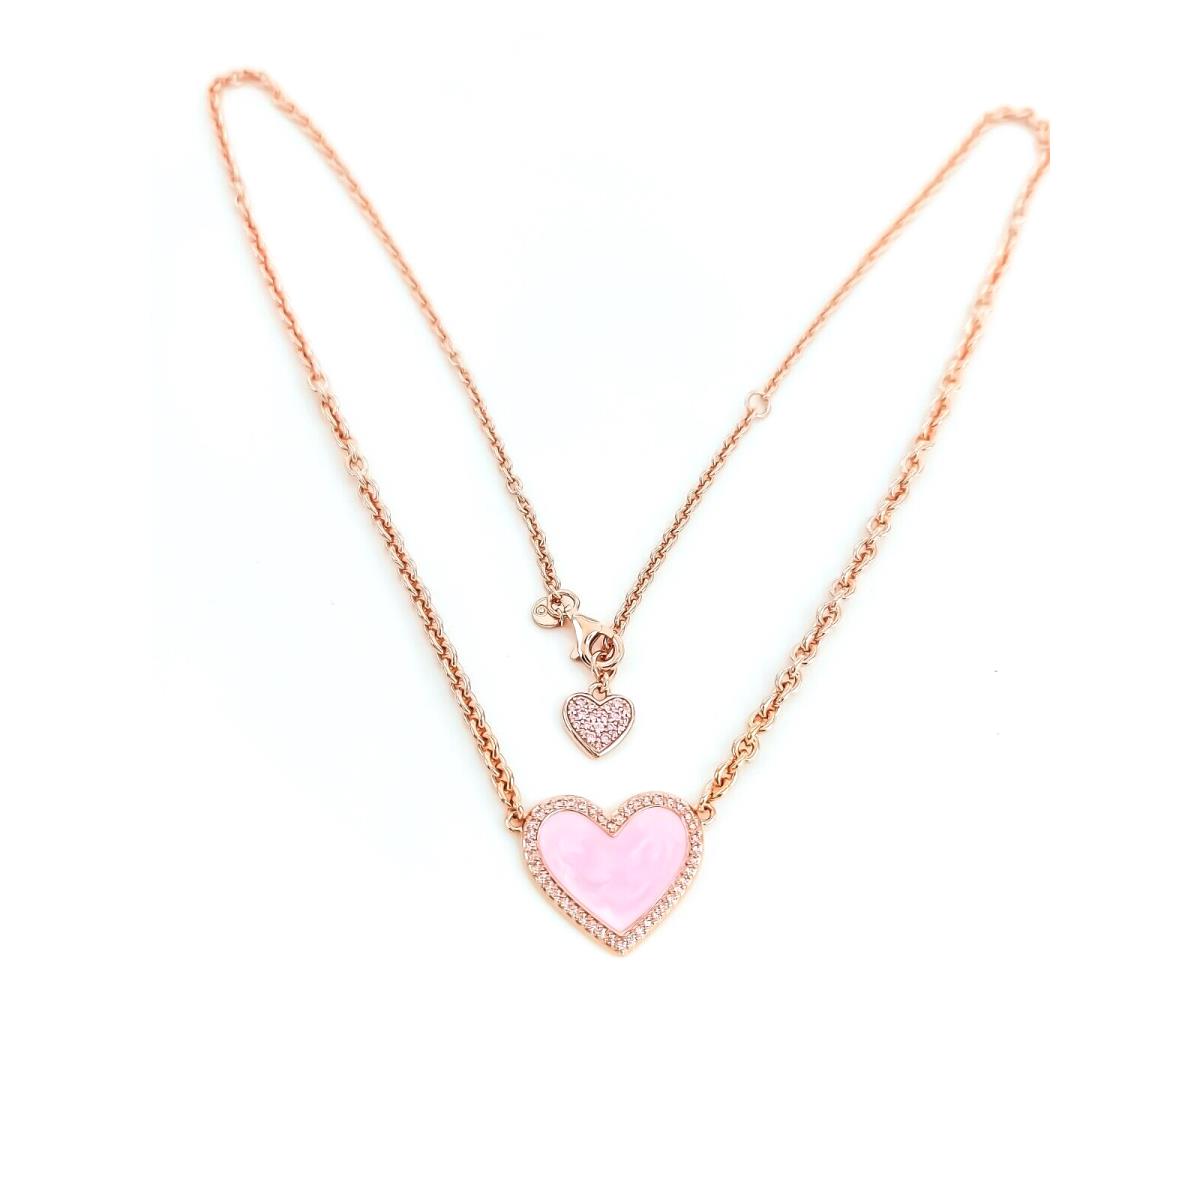 in Gift Box Pandora 389279C01 Rose Gold Pink Swirl Heart Pendant Necklace